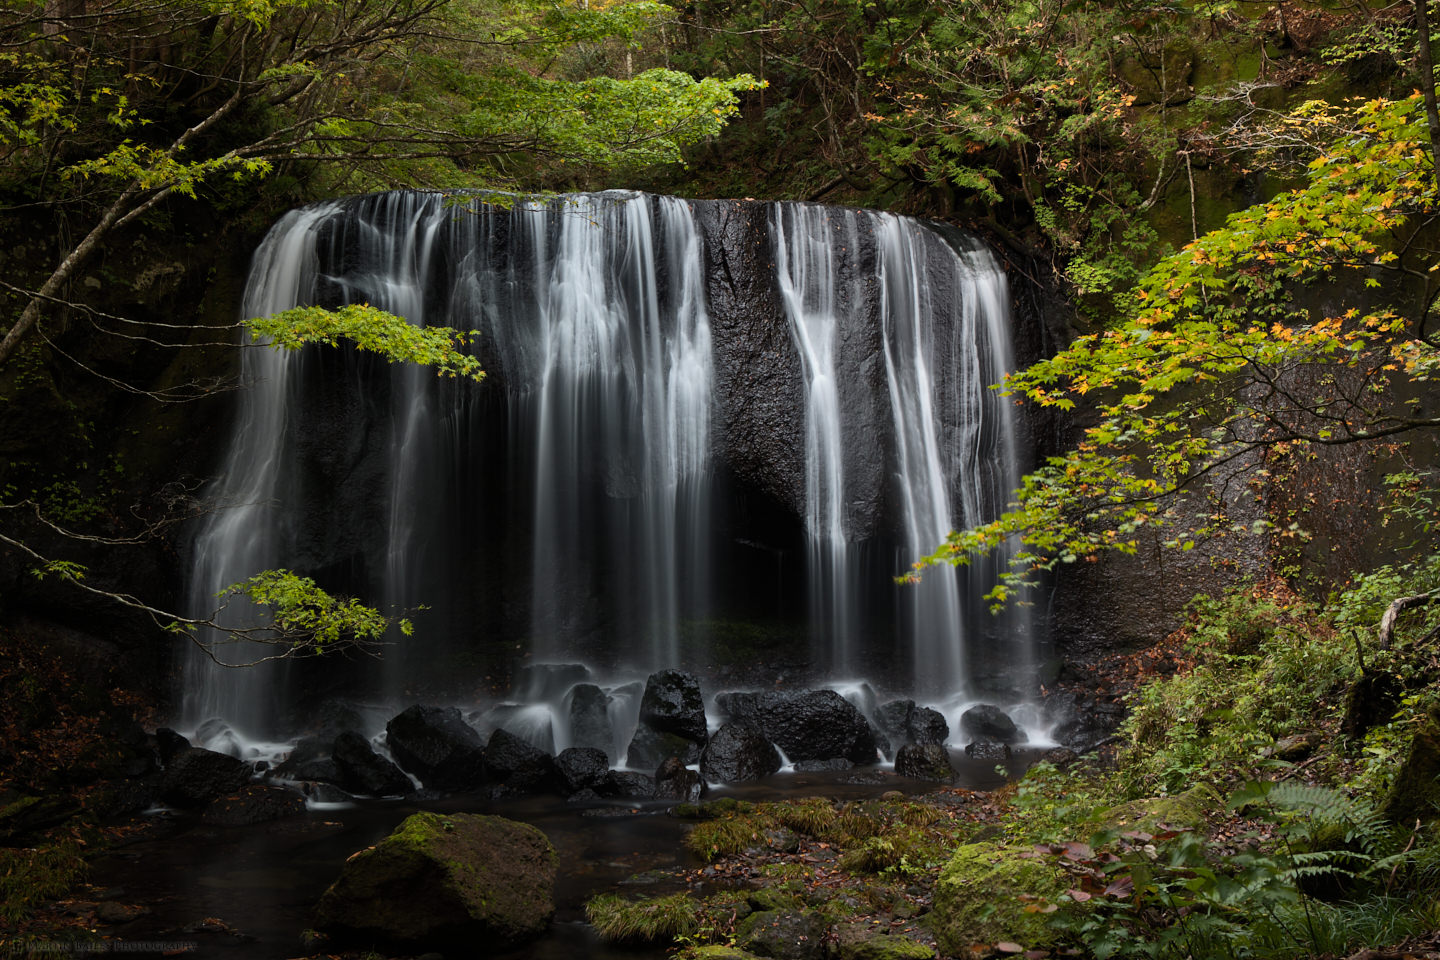 Tatsusawa Falls with a Smidgen of Fall Color